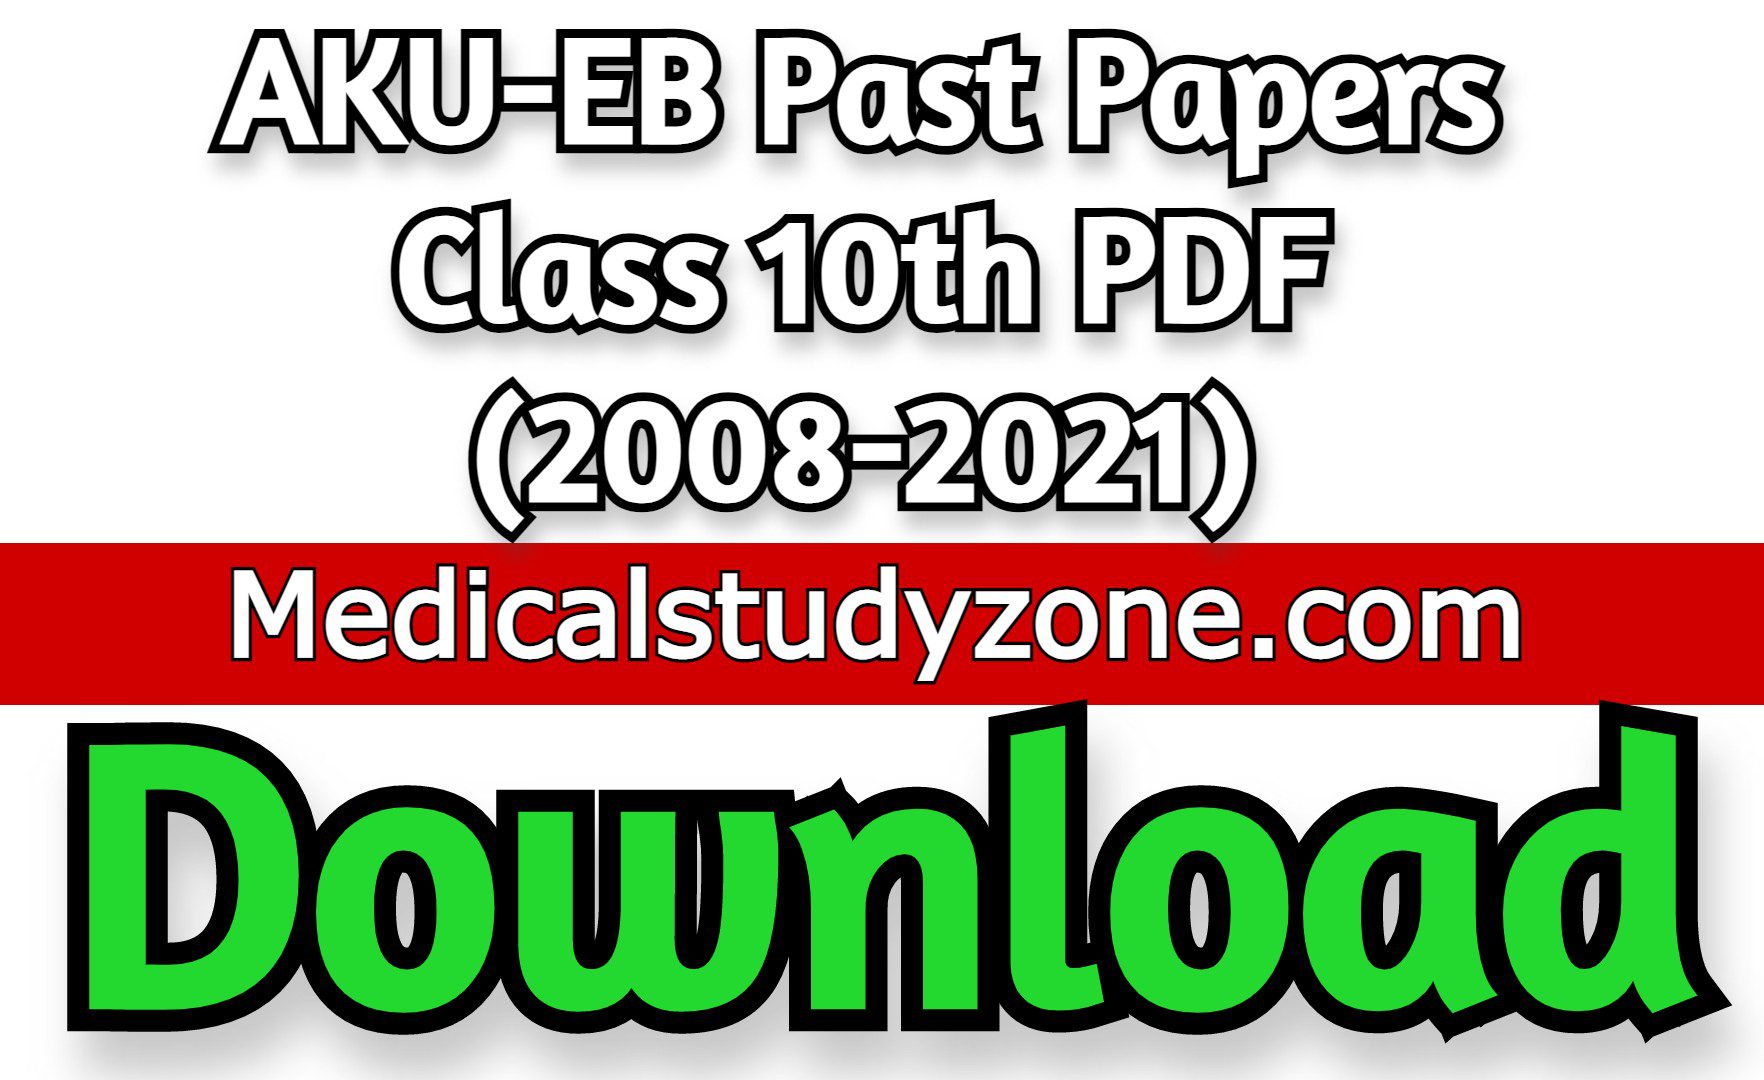 AKU-EB Past Papers Class 10th PDF (2008-2021) Free Download